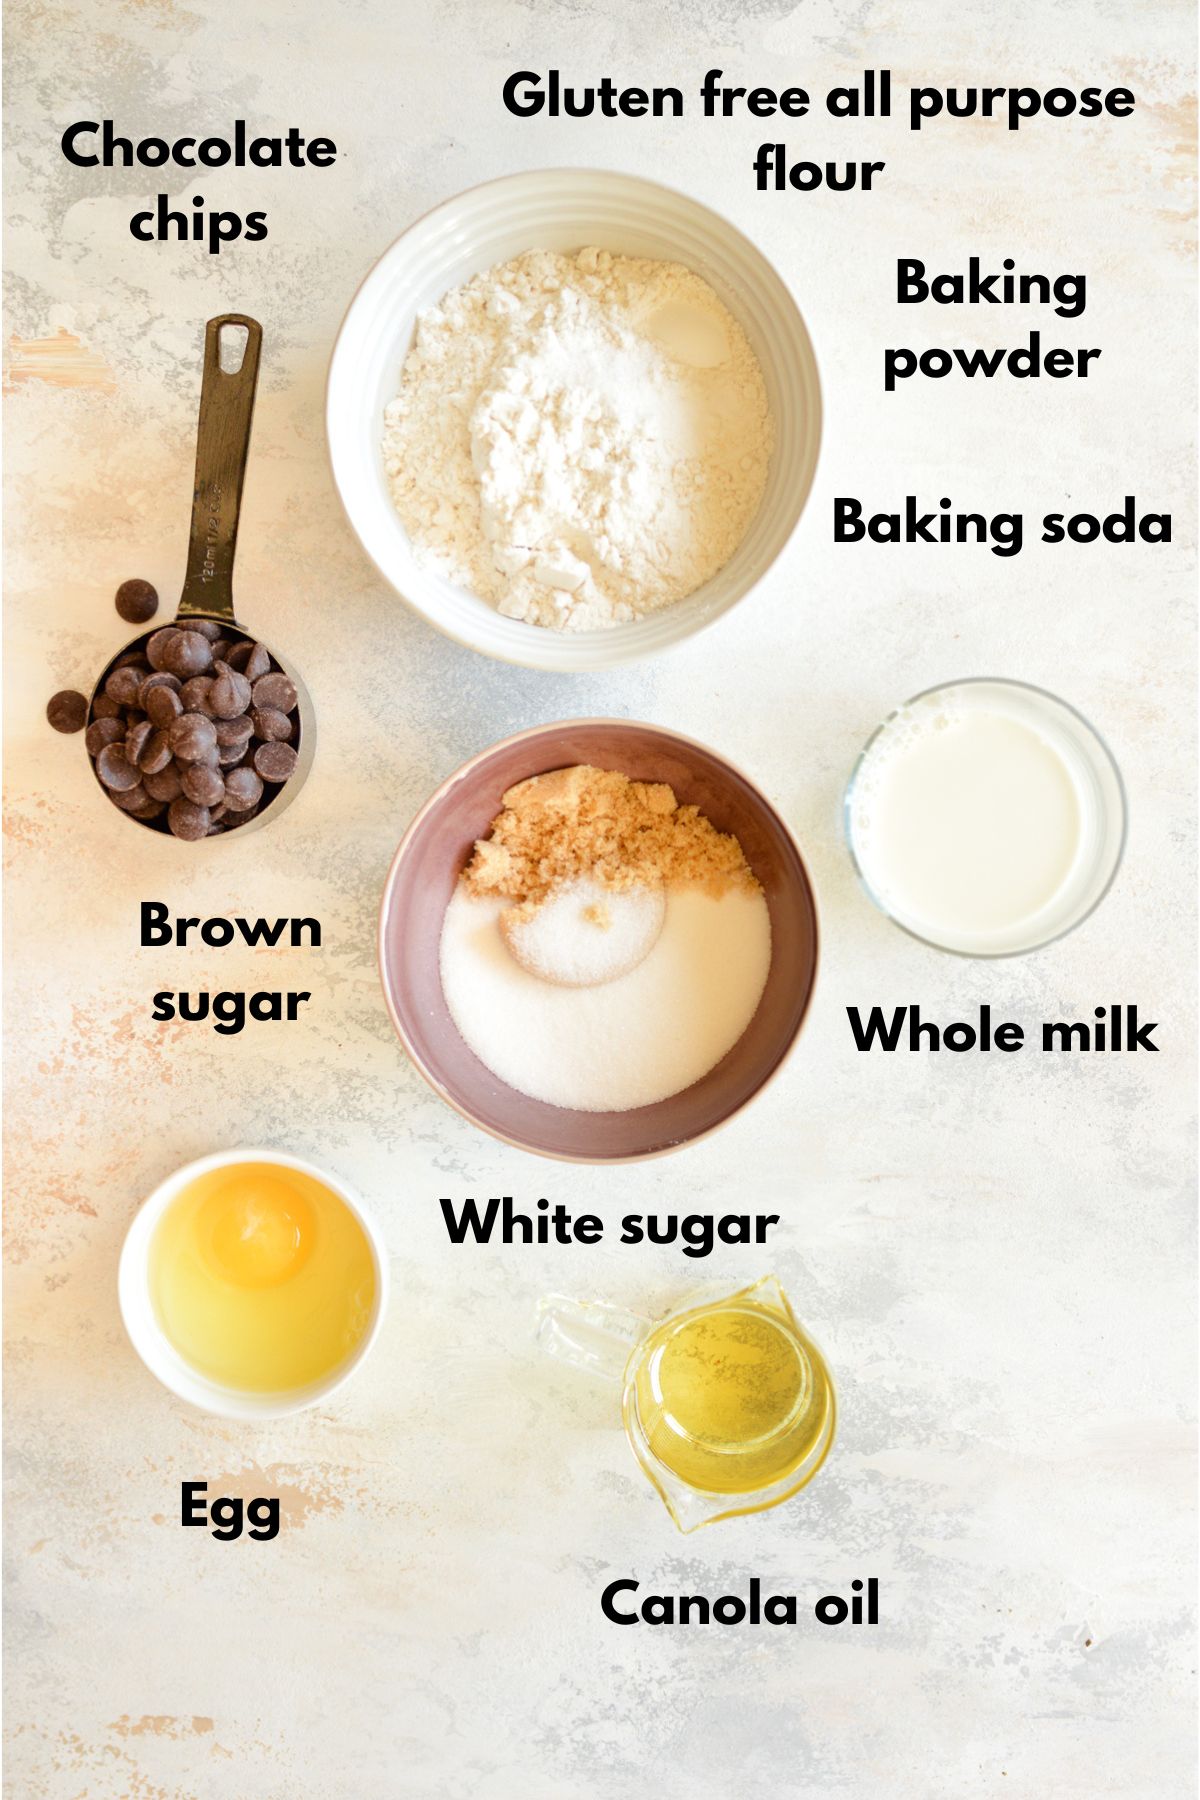 gluten-free flour, chocolate chips, baking powder, baking soda, sugar, milk, and eggs